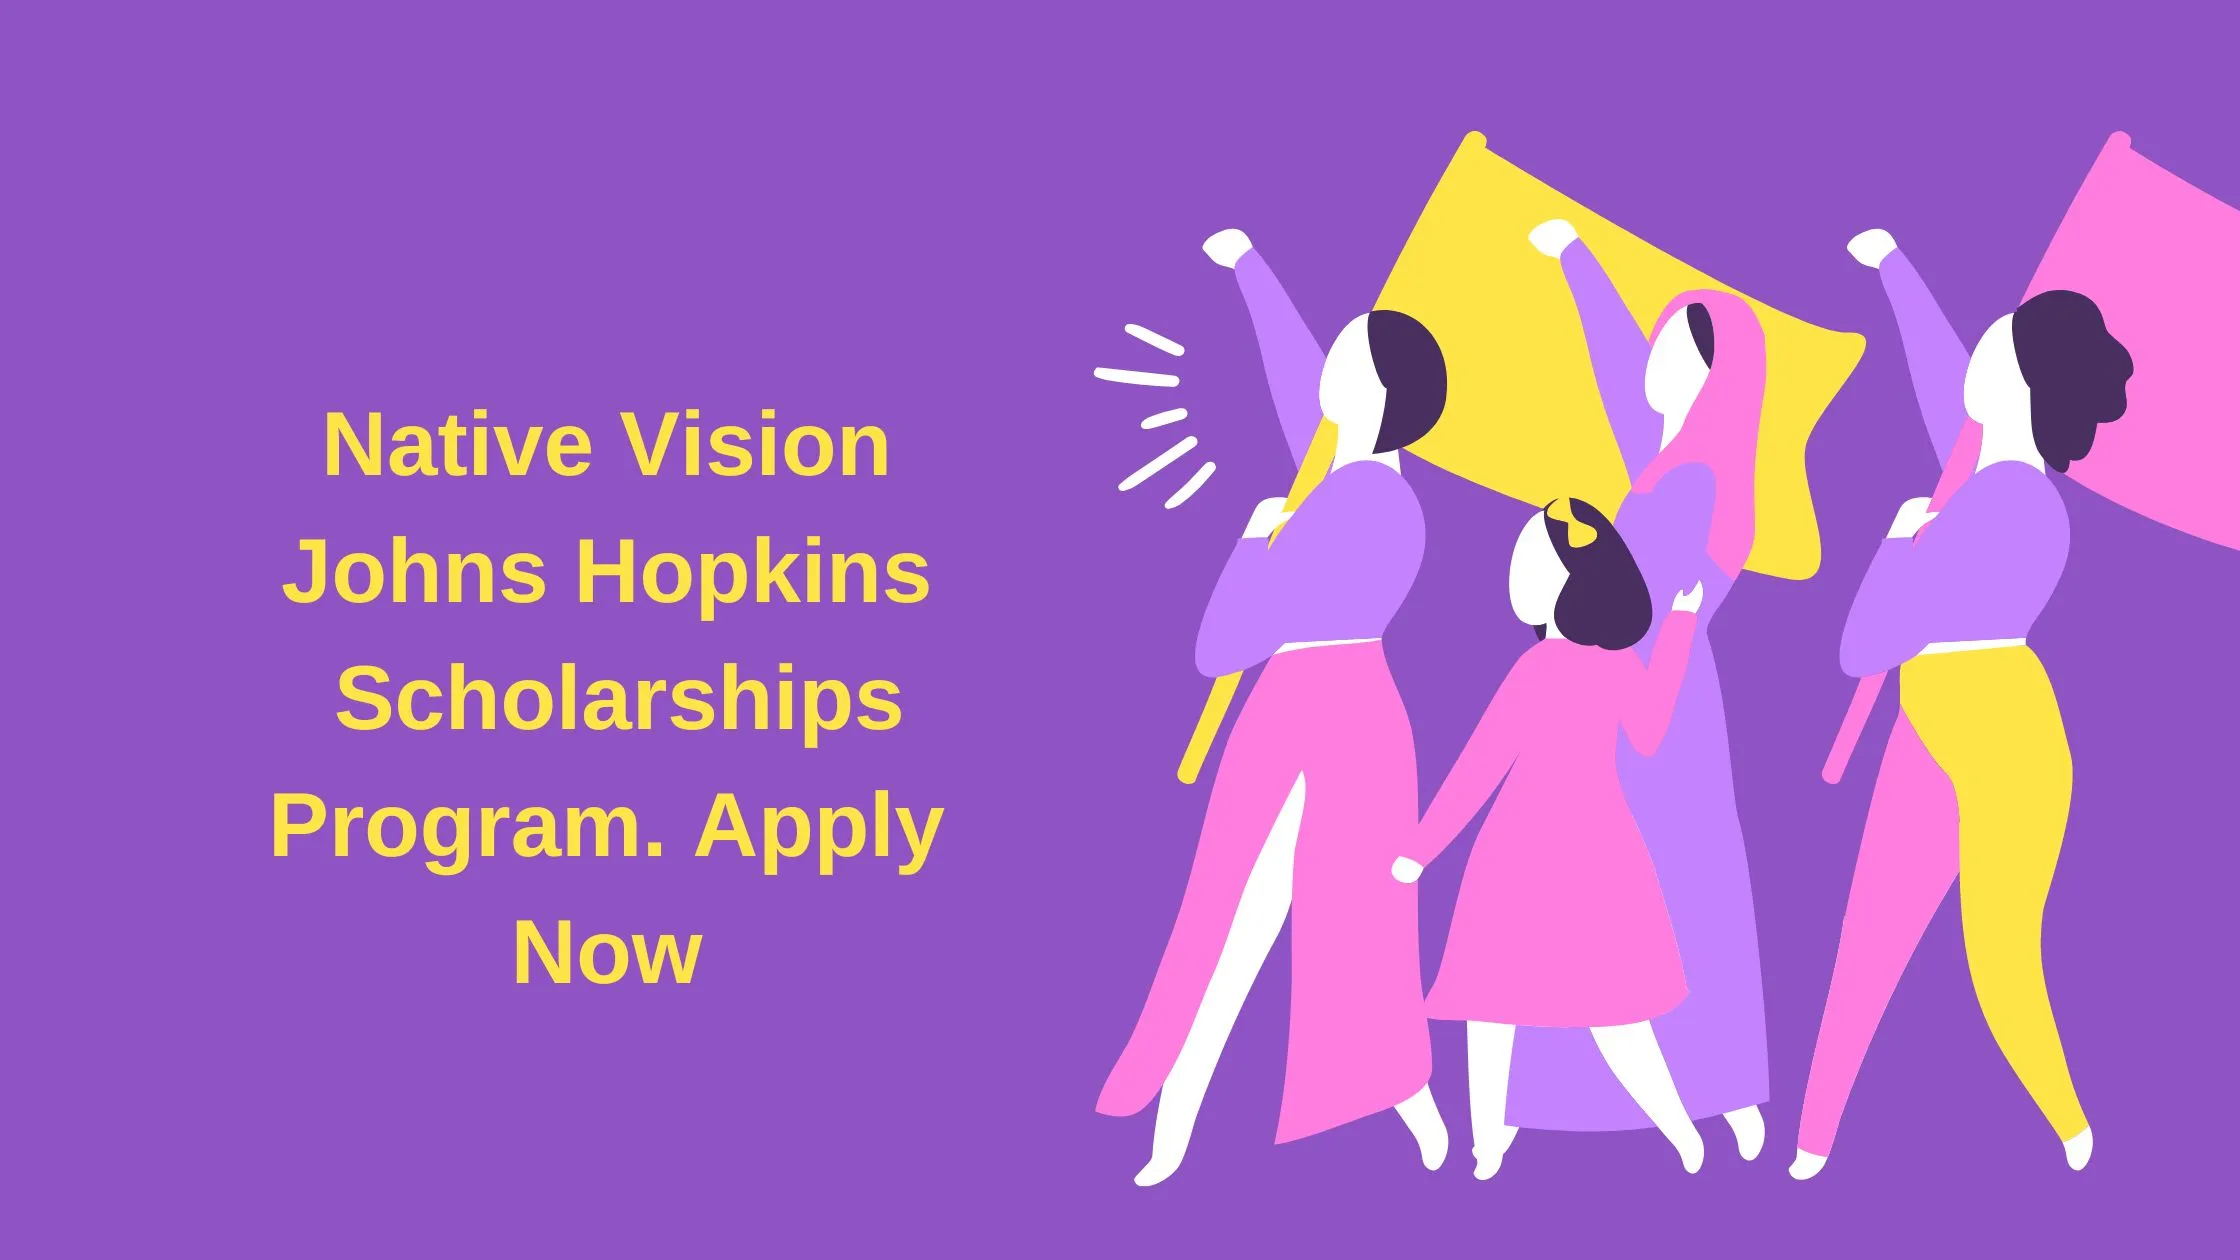 Native Vision Johns Hopkins Scholarships Program.